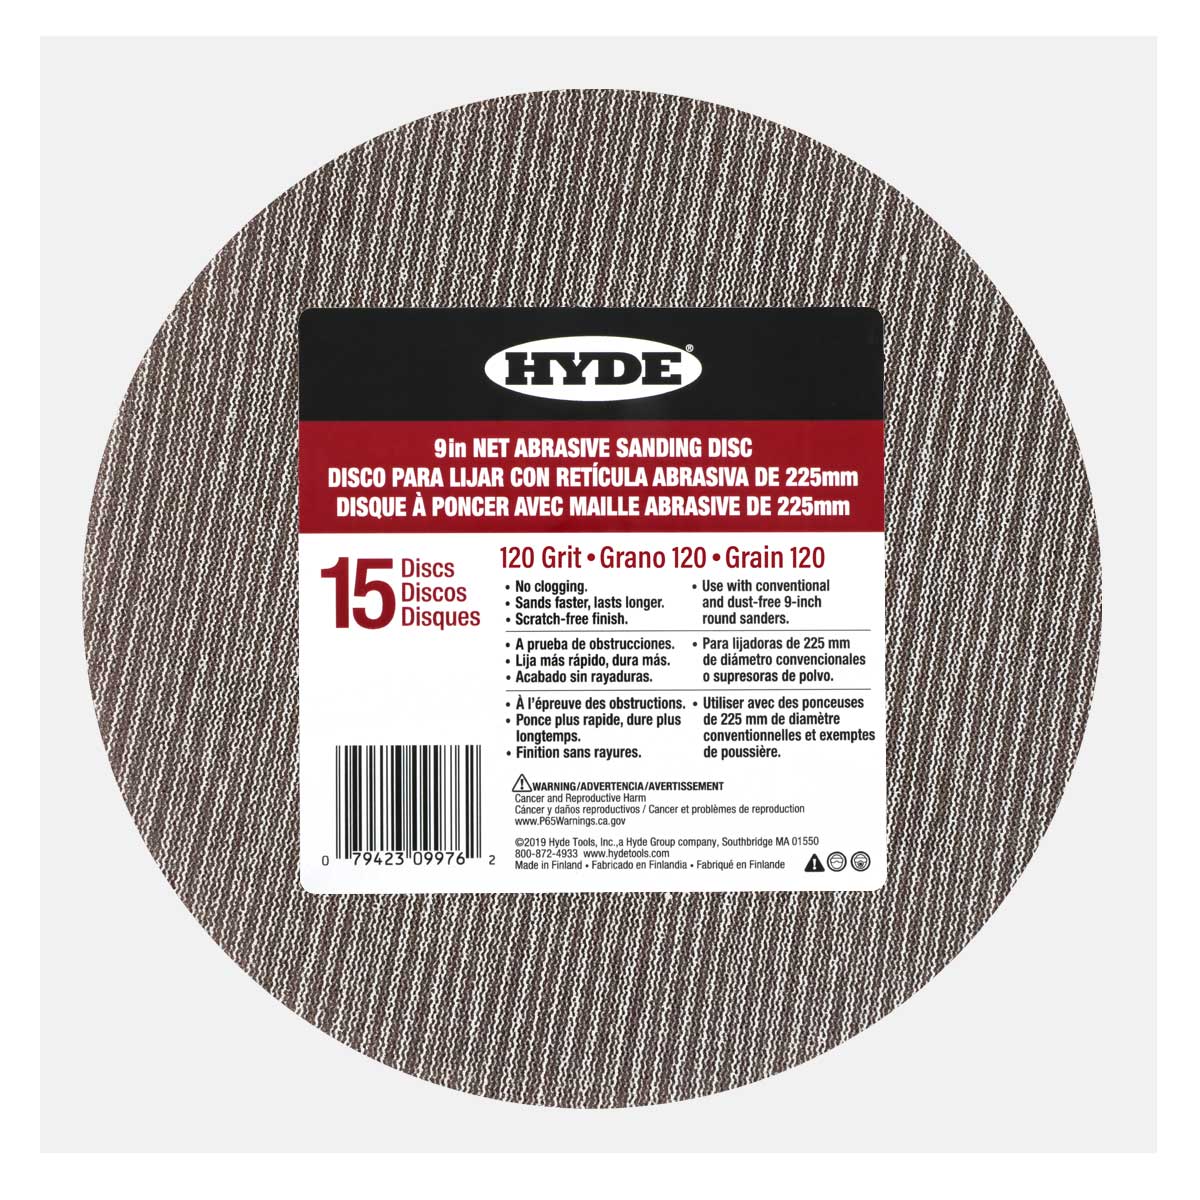 Hyde Net Abrasive Sanding Discs 120